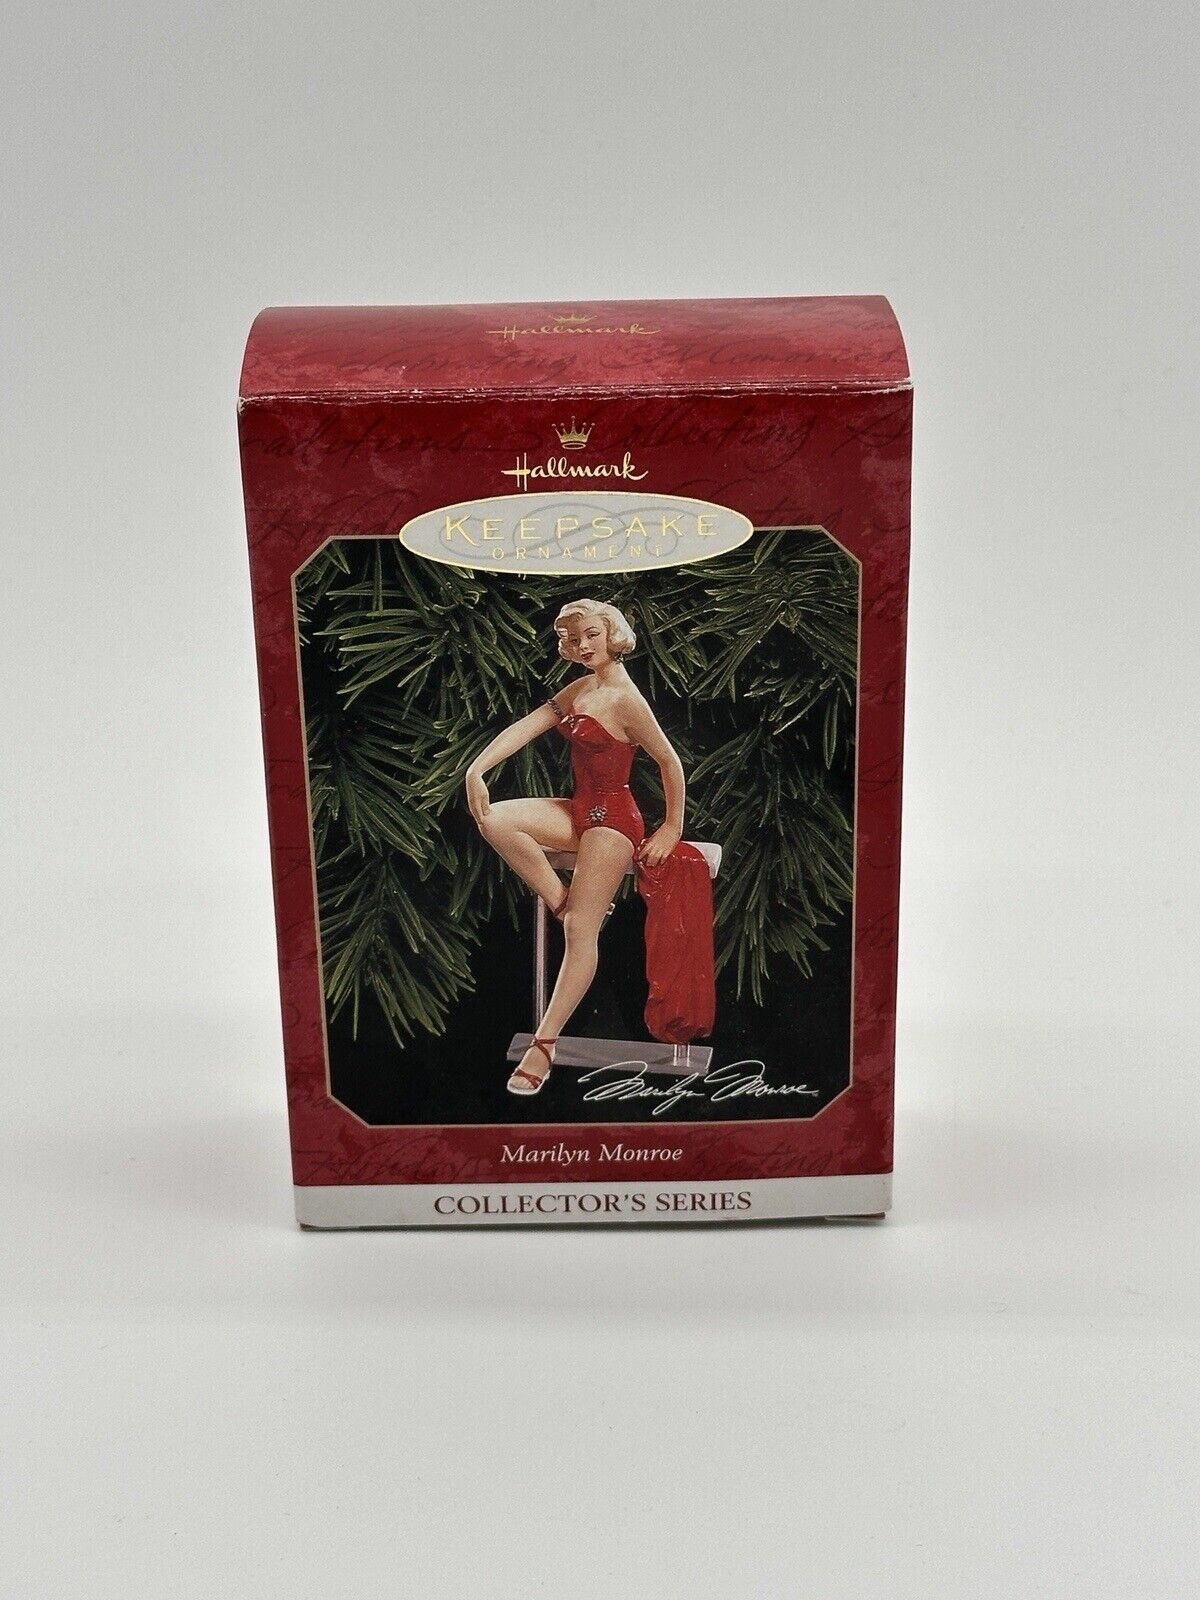 Hallmark Keepsake Marilyn Monroe 1999 Collector's Series #3 Christmas Ornament